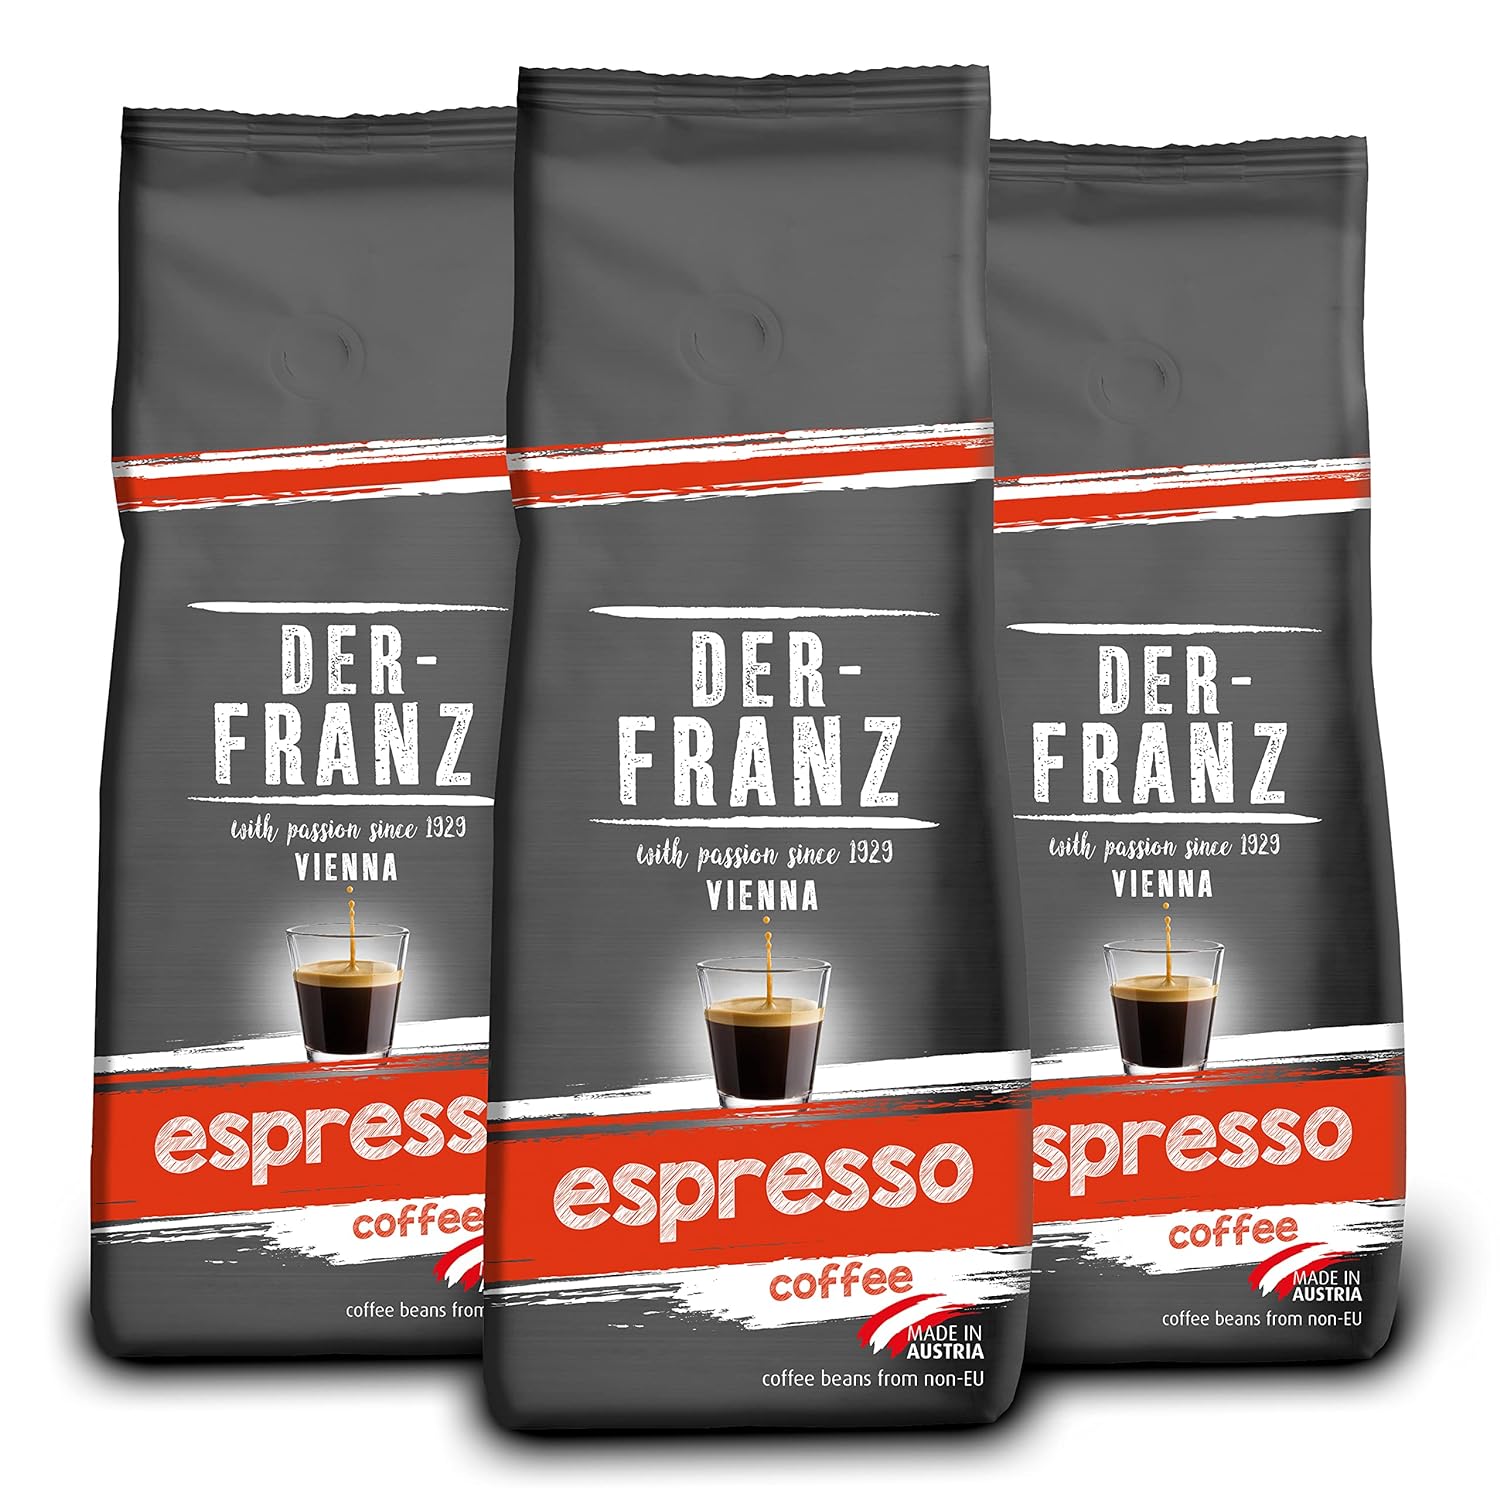 Der-Franz Espresso Coffee, whole bean, 3 x 500 g